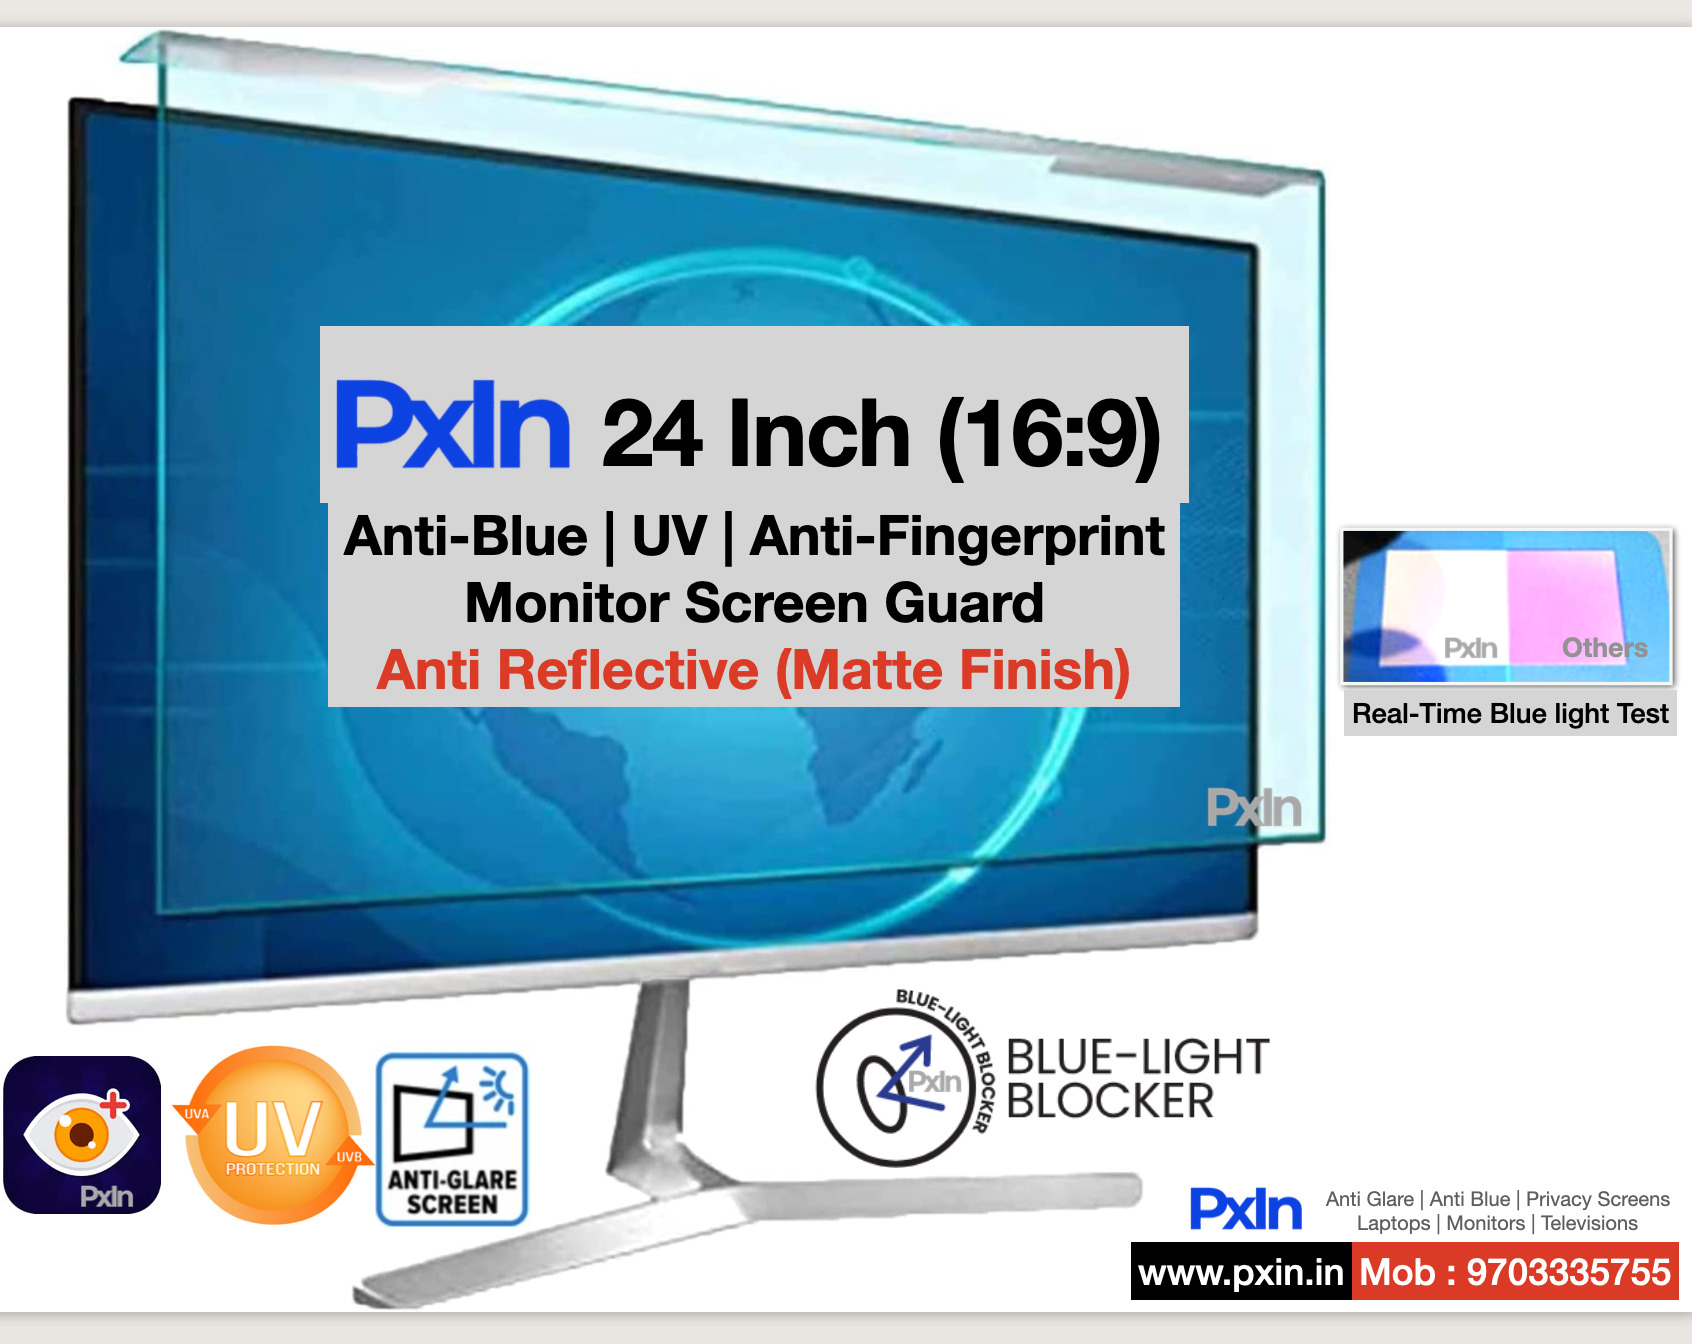 24 inch (16:9) Monitor Screen Guard